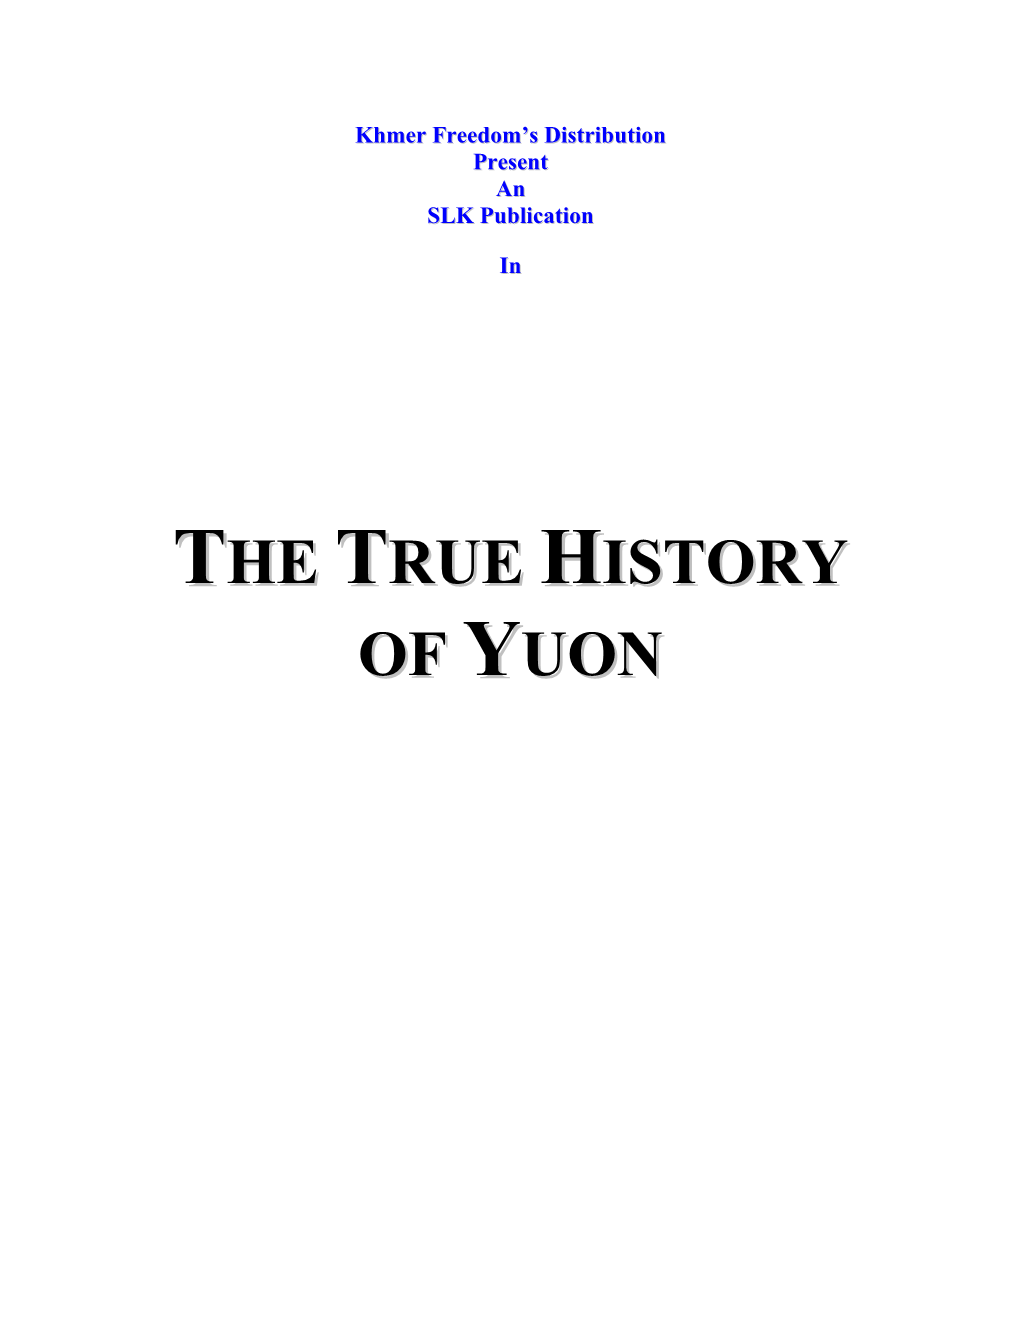 The True History of Yuon